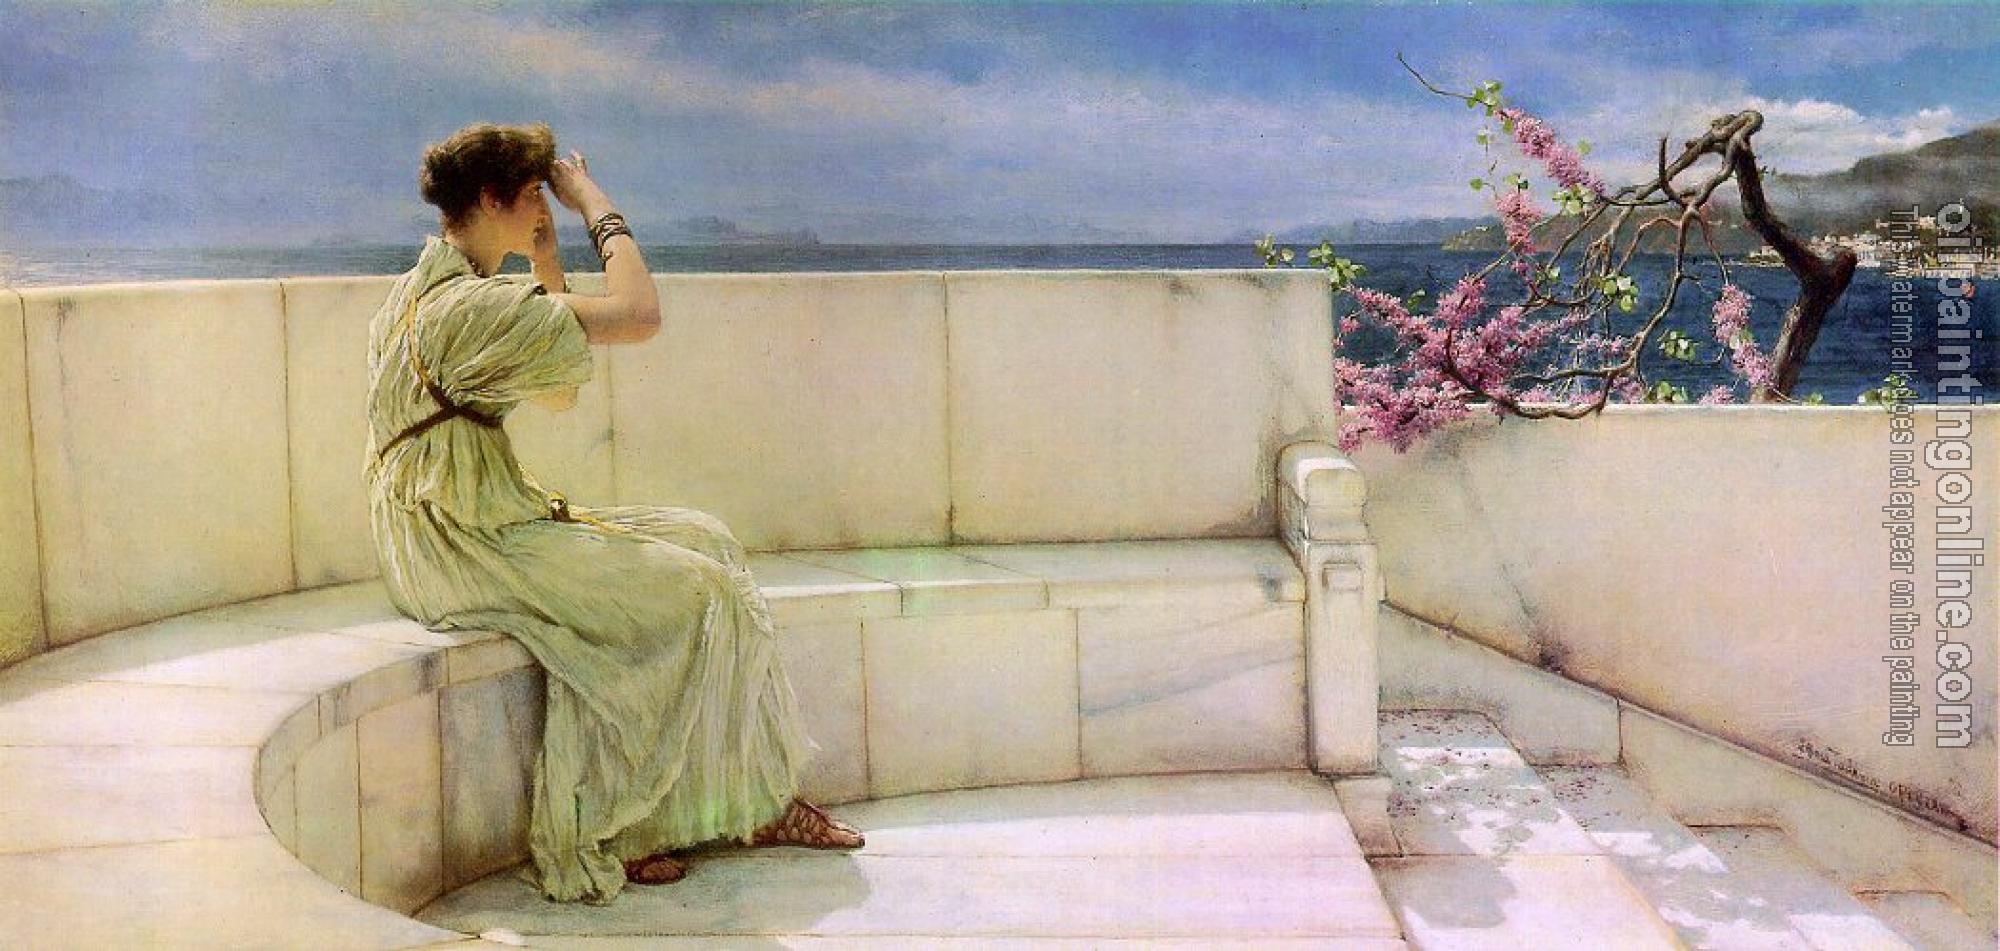 Alma-Tadema, Sir Lawrence - Expectations